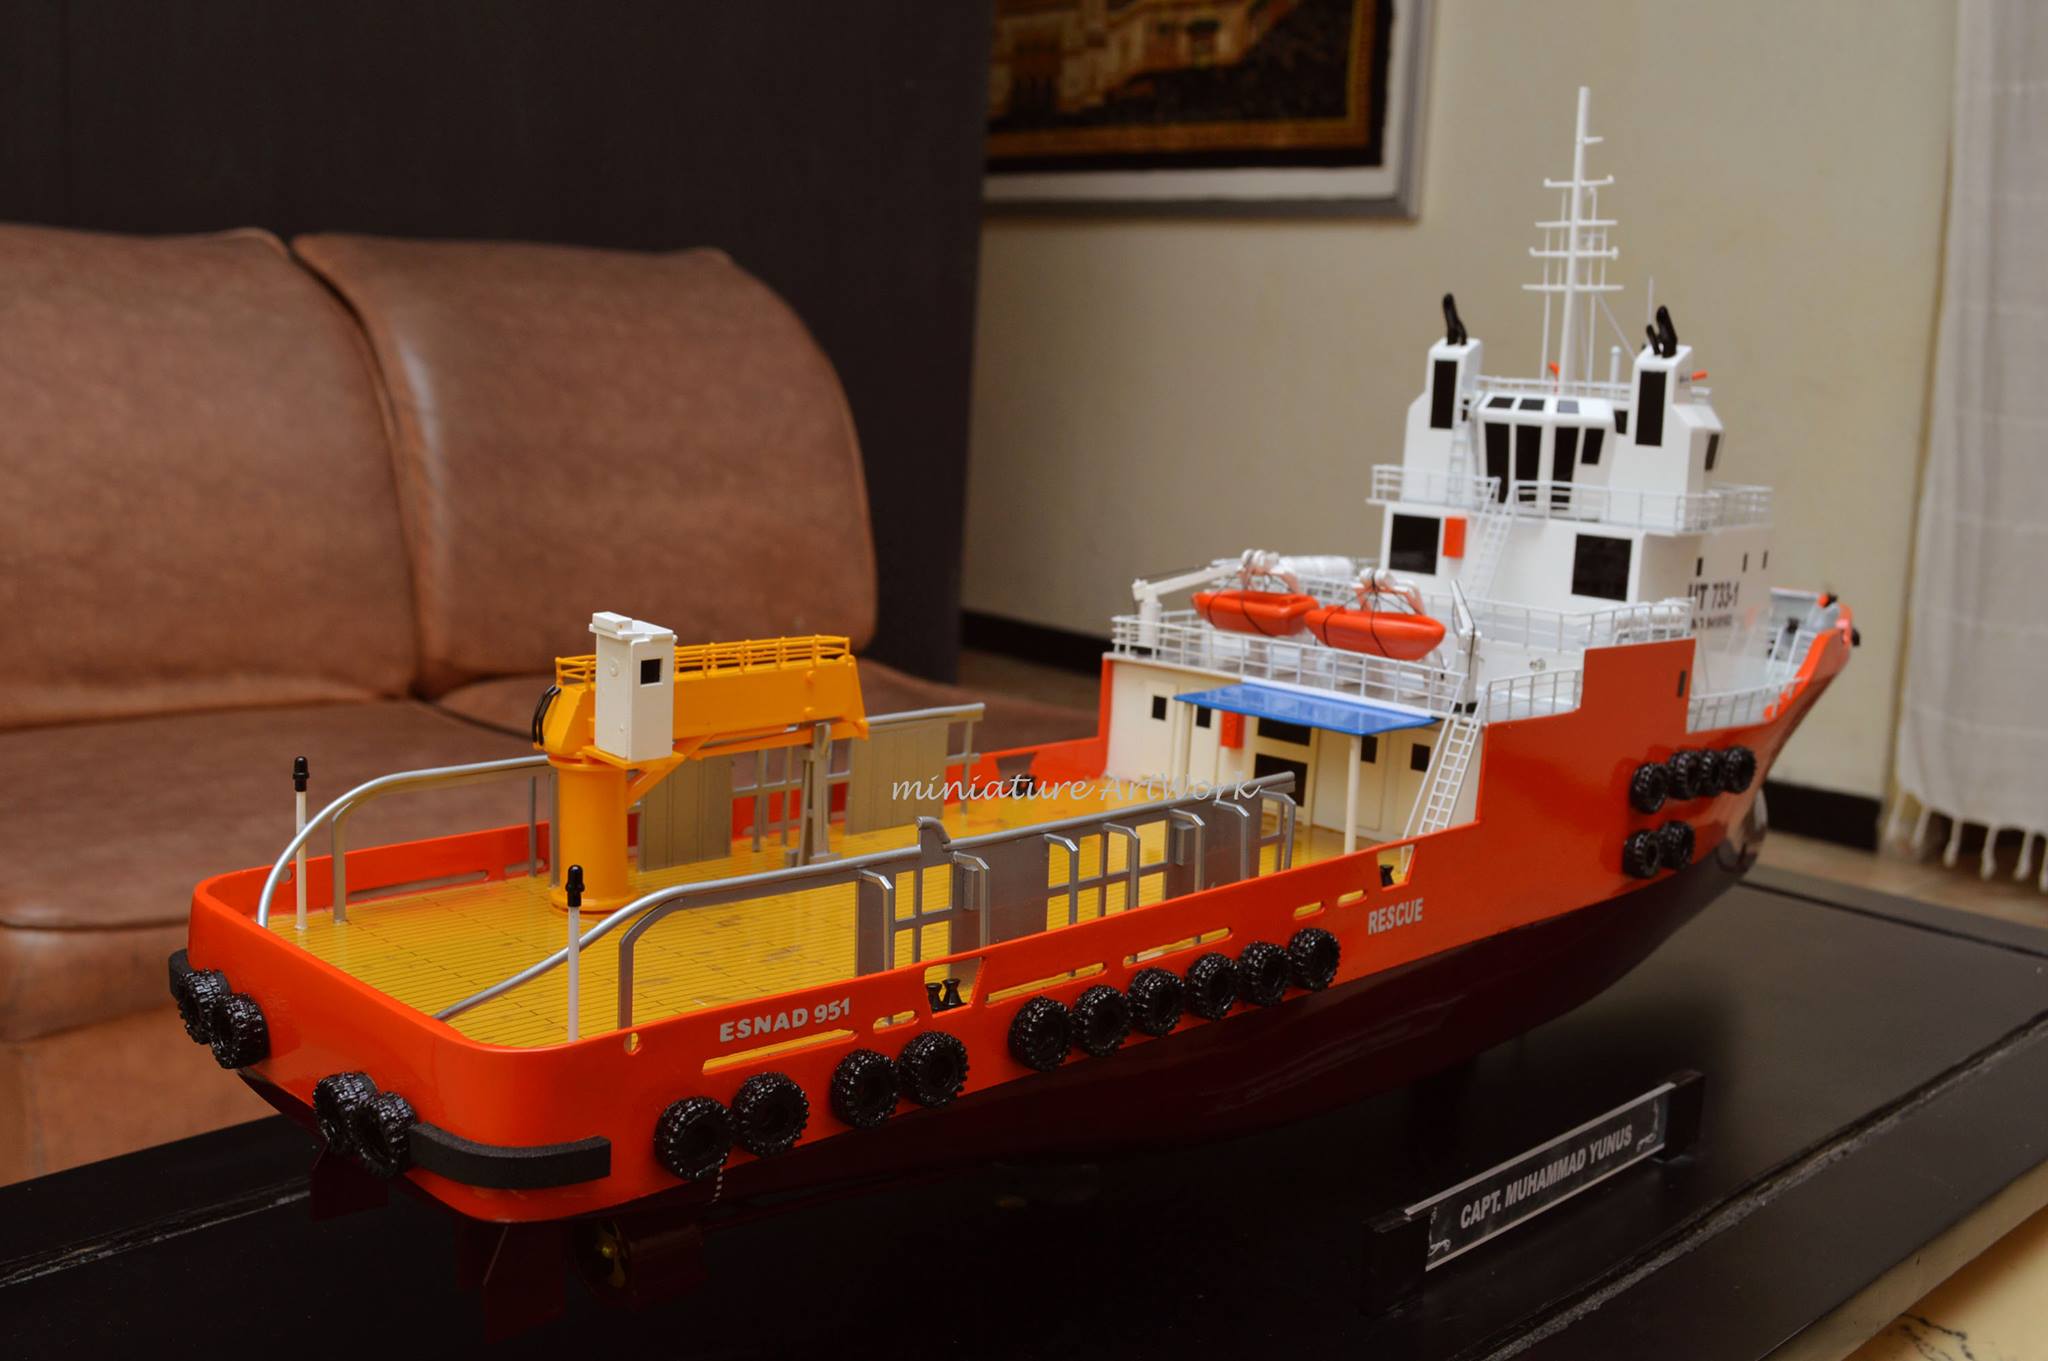 harga miniatur kapal ahts esnaad 951 offshore supply ship milik perusahaan adnoc abu dhabi national oil company uea murah